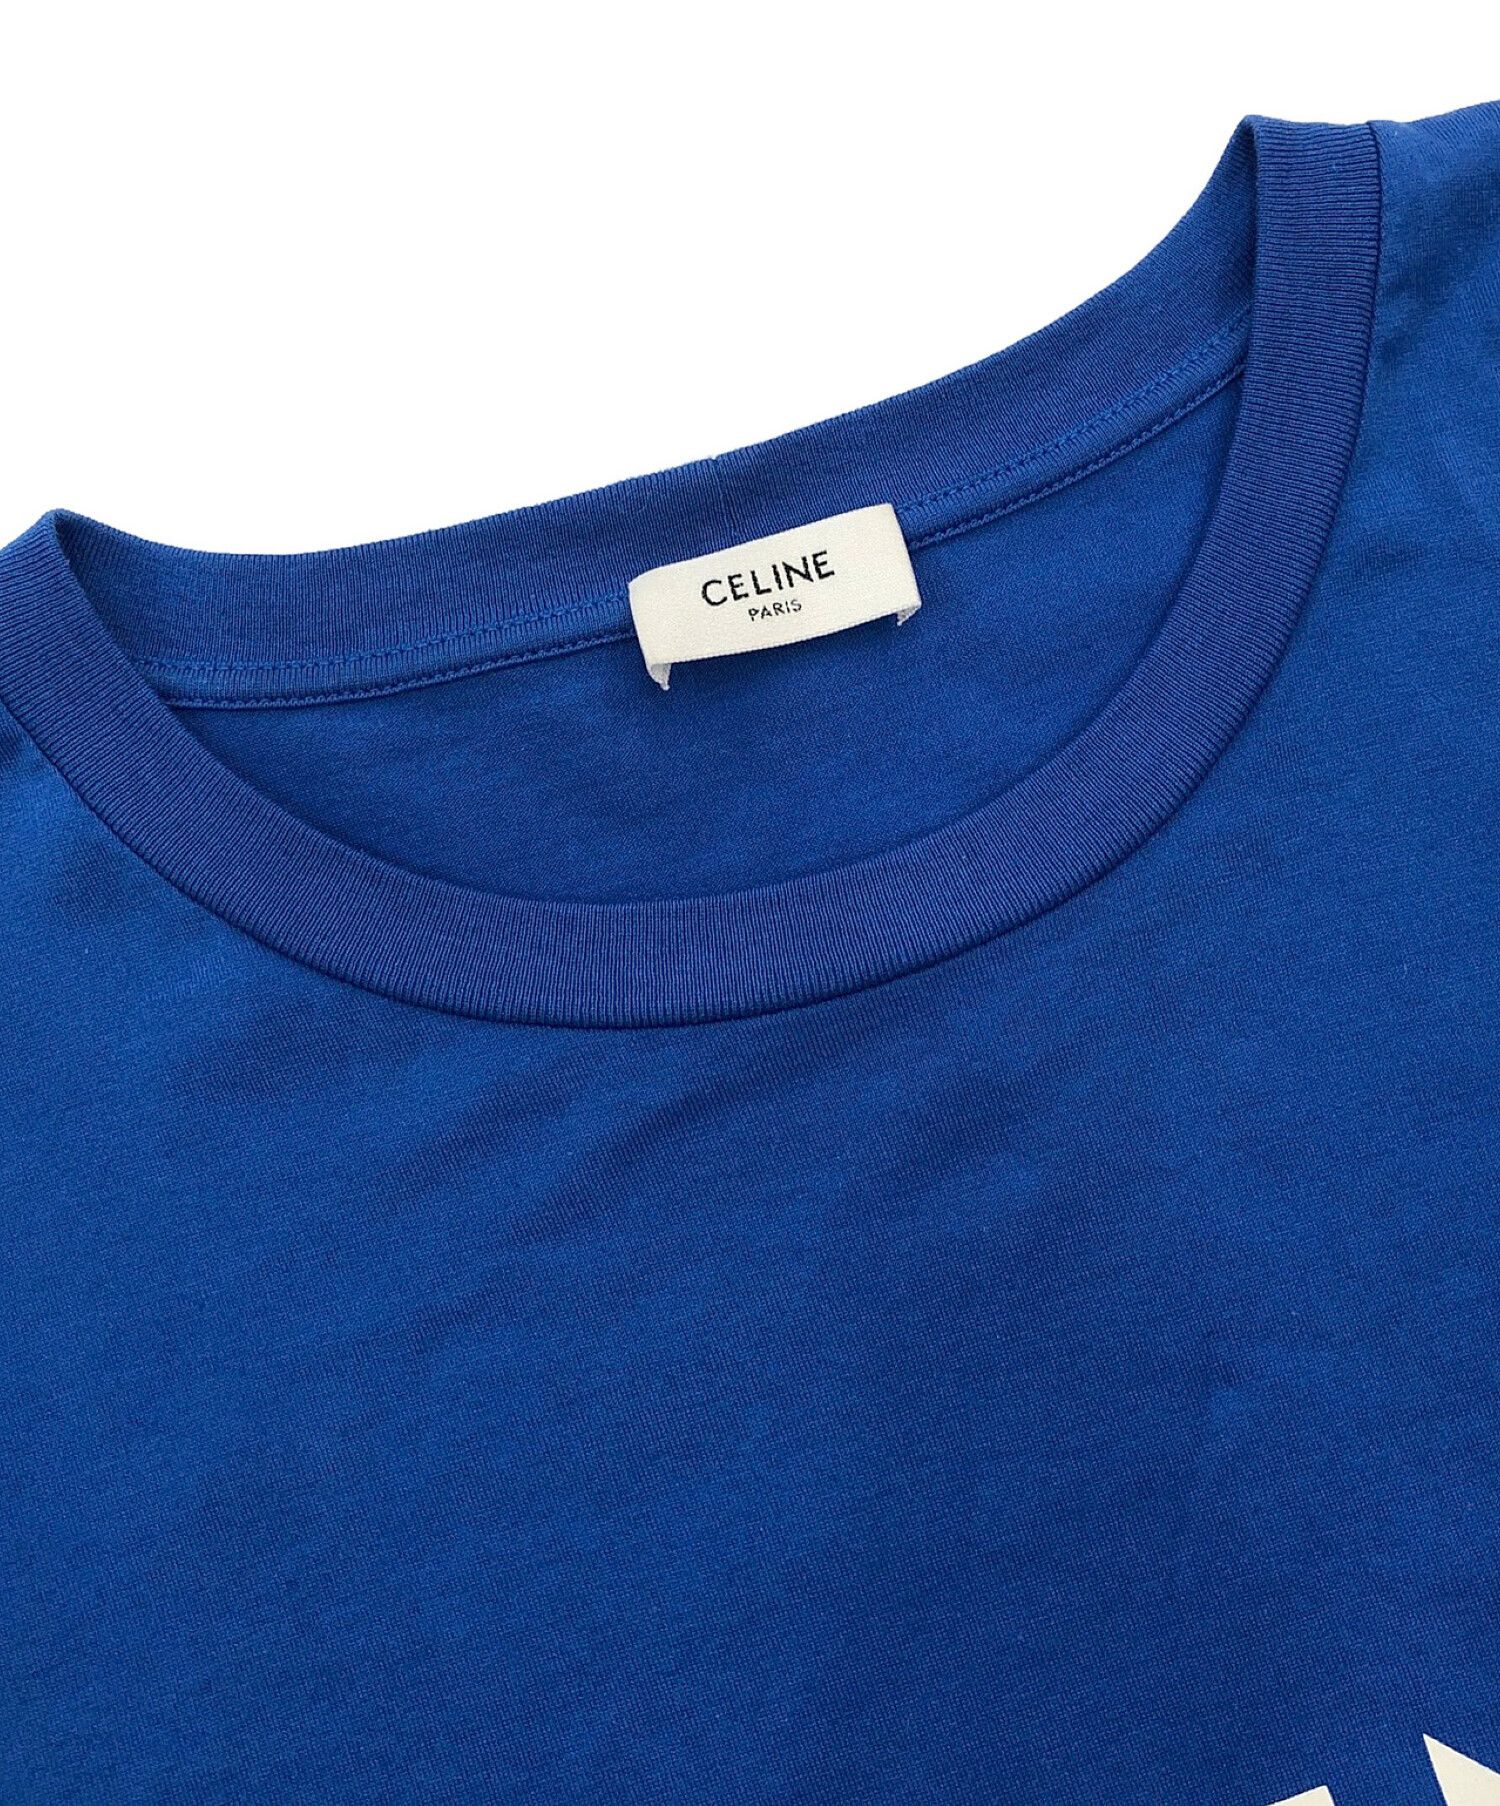 CELINE (セリーヌ) CELINE ルーズ Tシャツ ブルー サイズ:XS